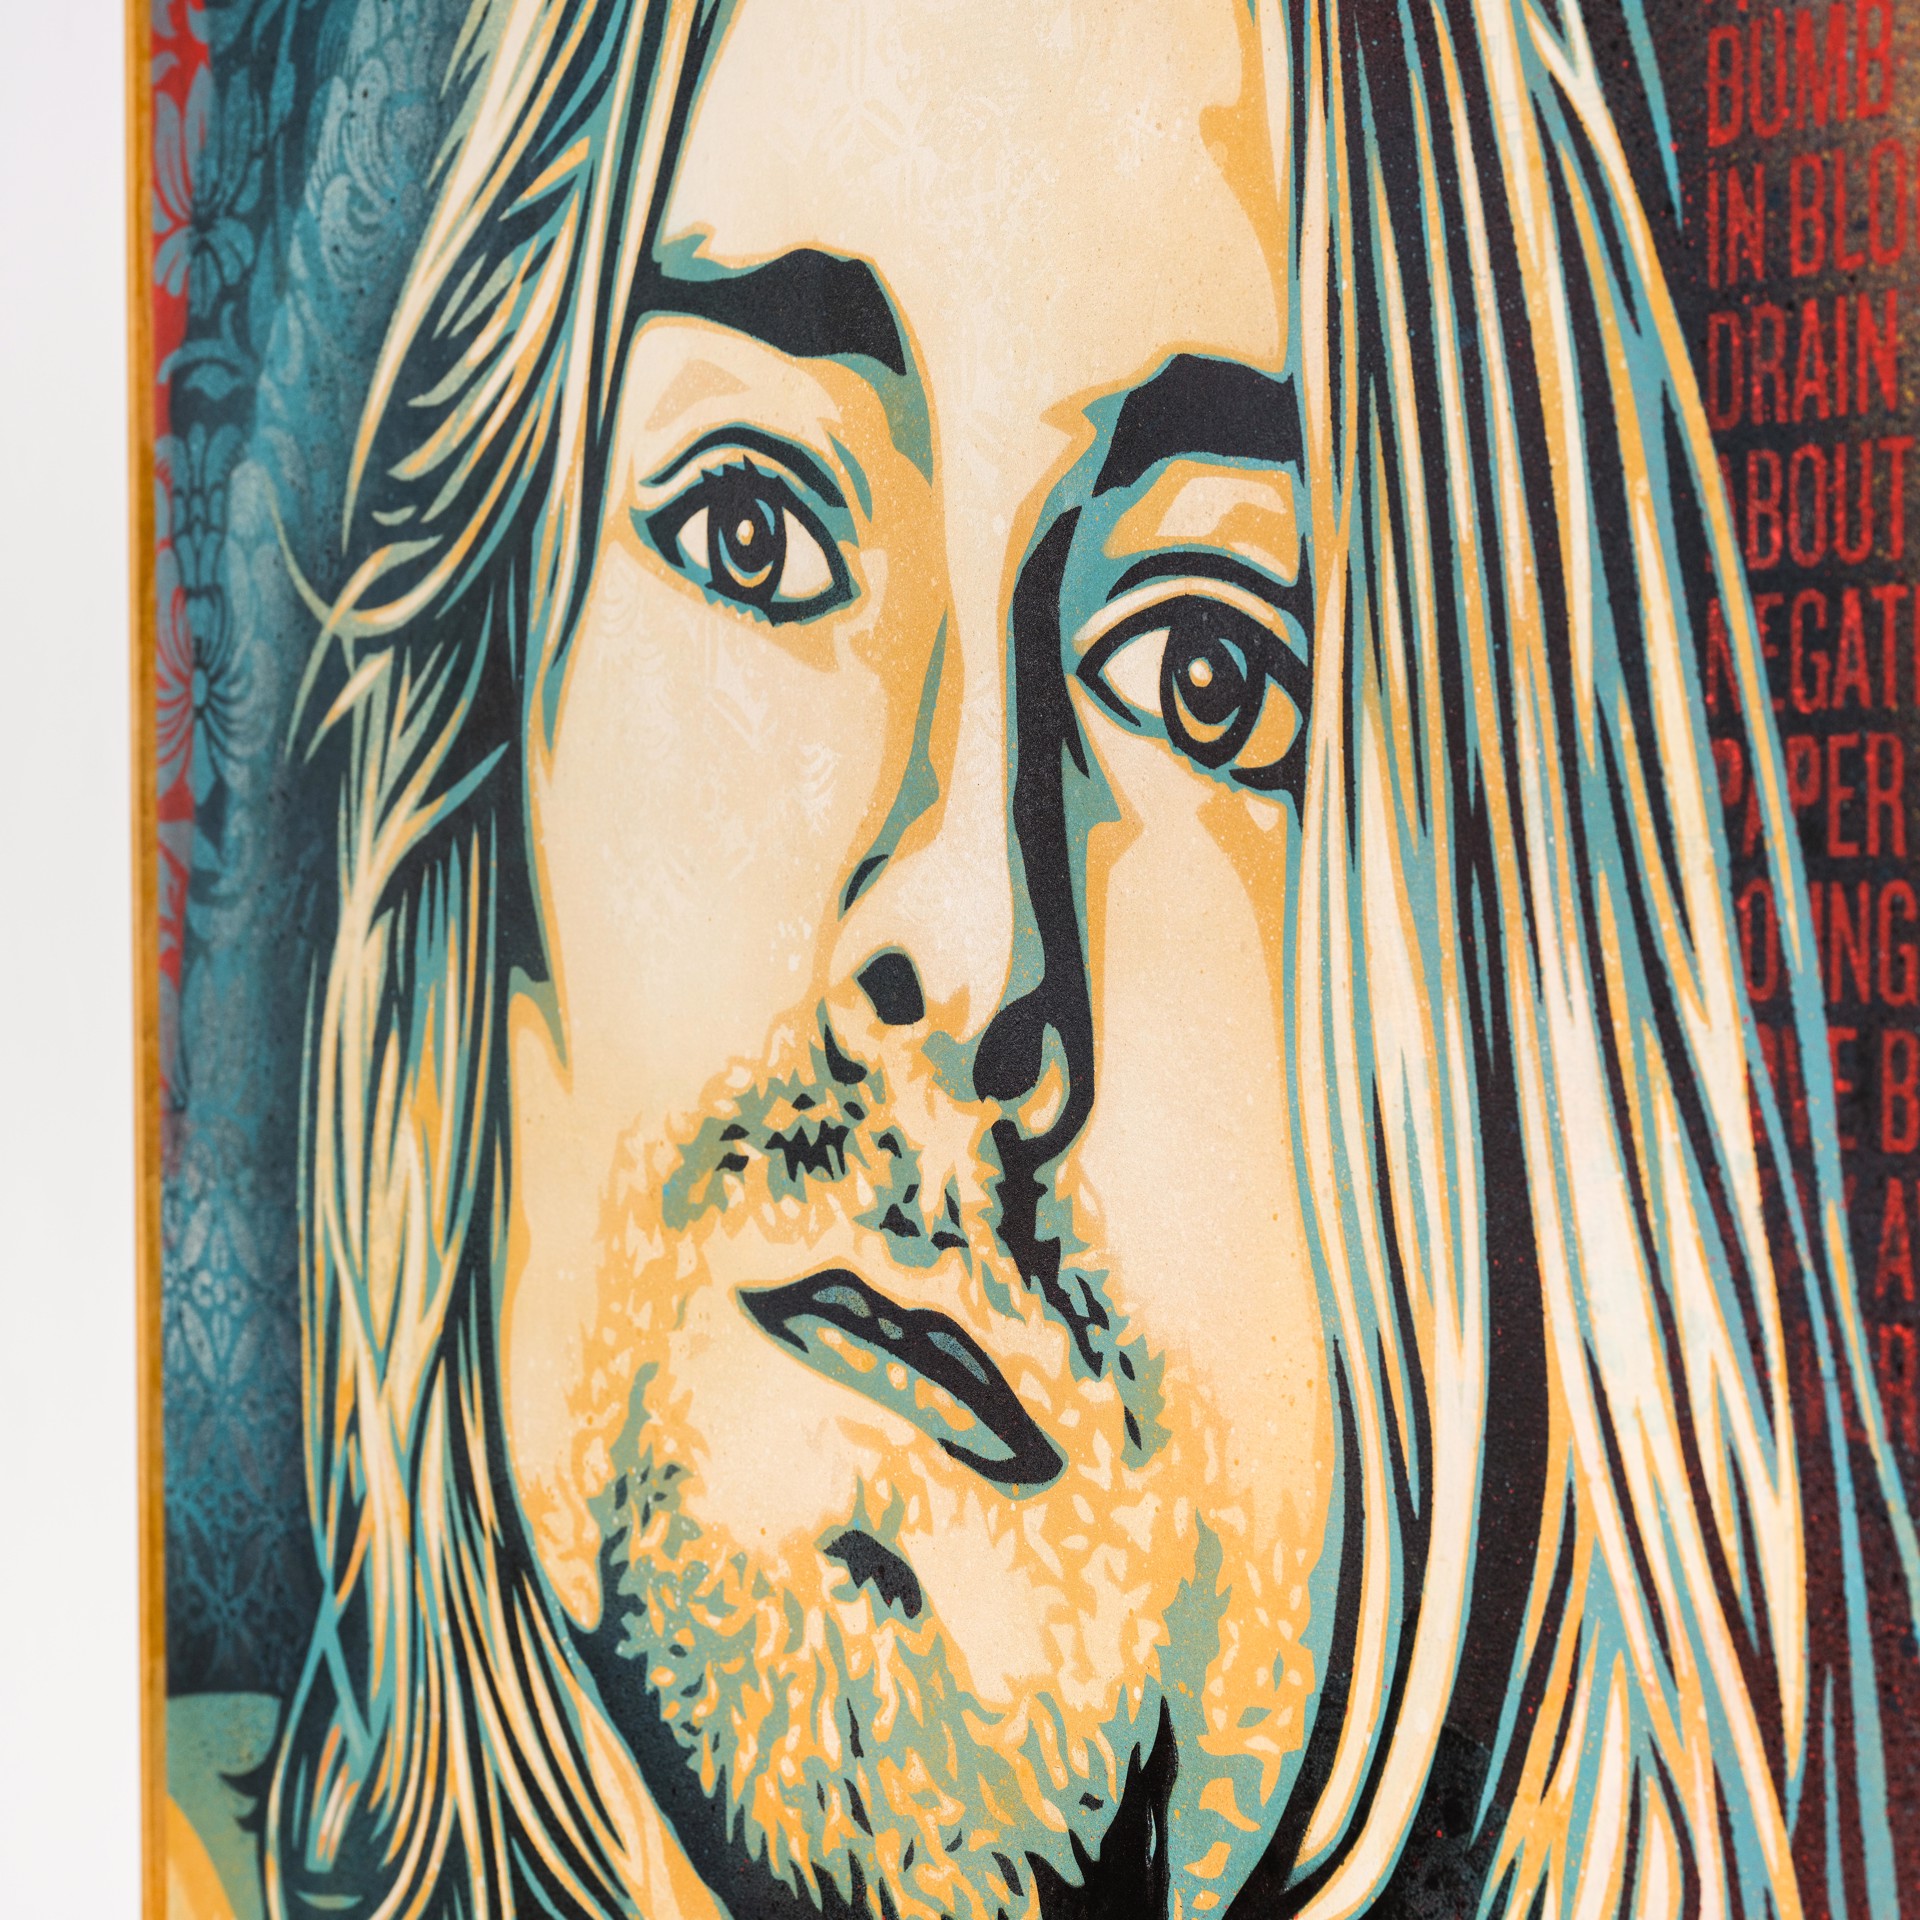 Kurt Cobain - Endless Nameless, Version 2 by Shepard Fairey /Originals